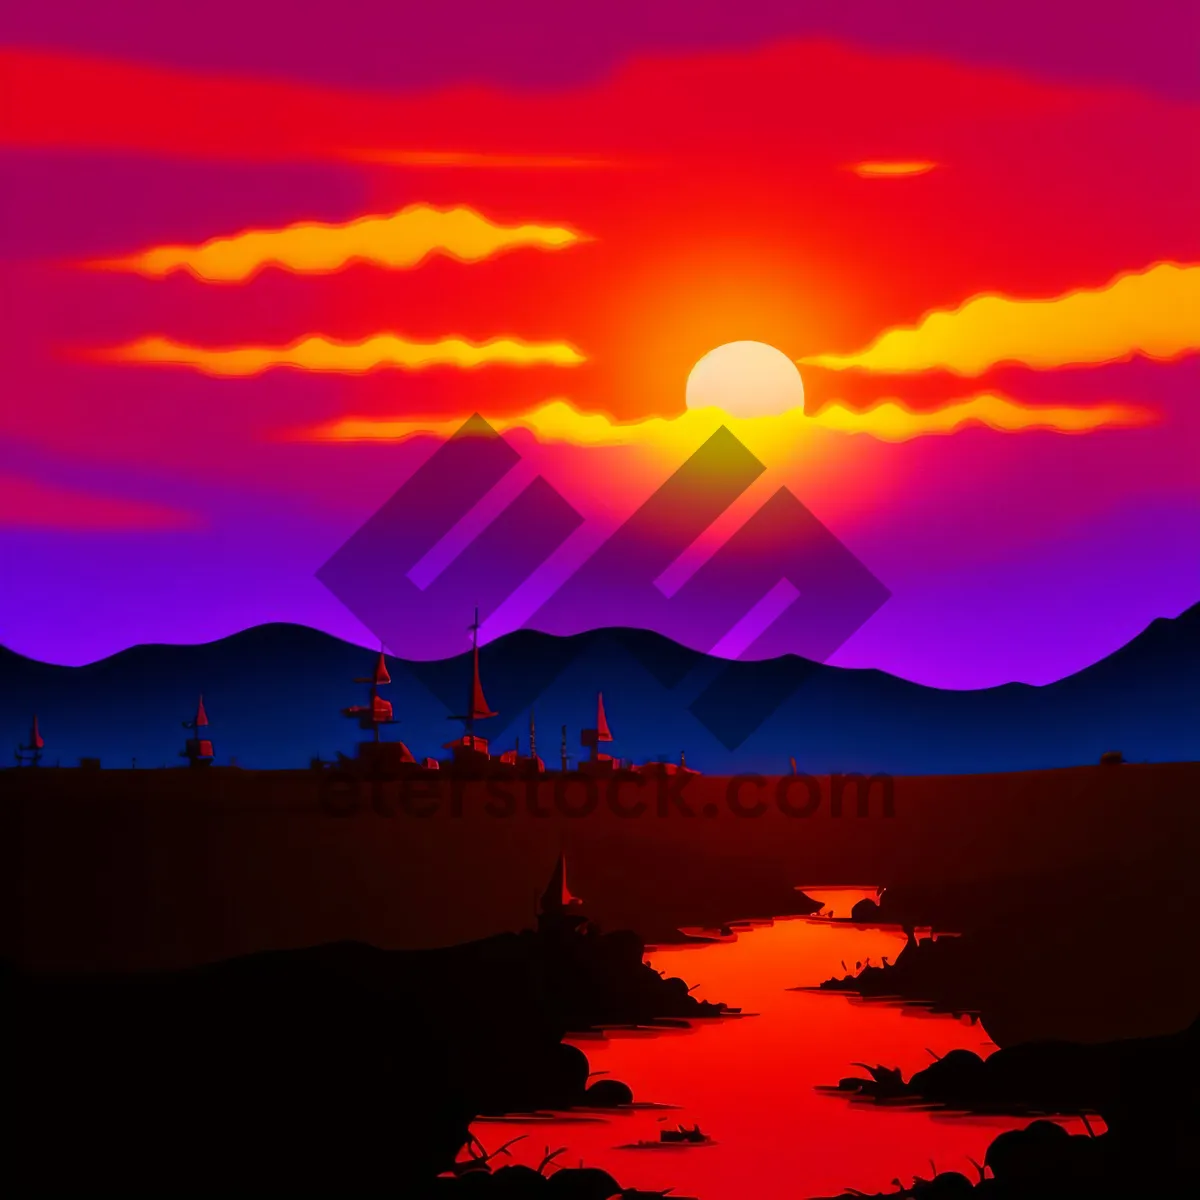 Picture of Vibrant Sunset Over Serene Savanna Landscape